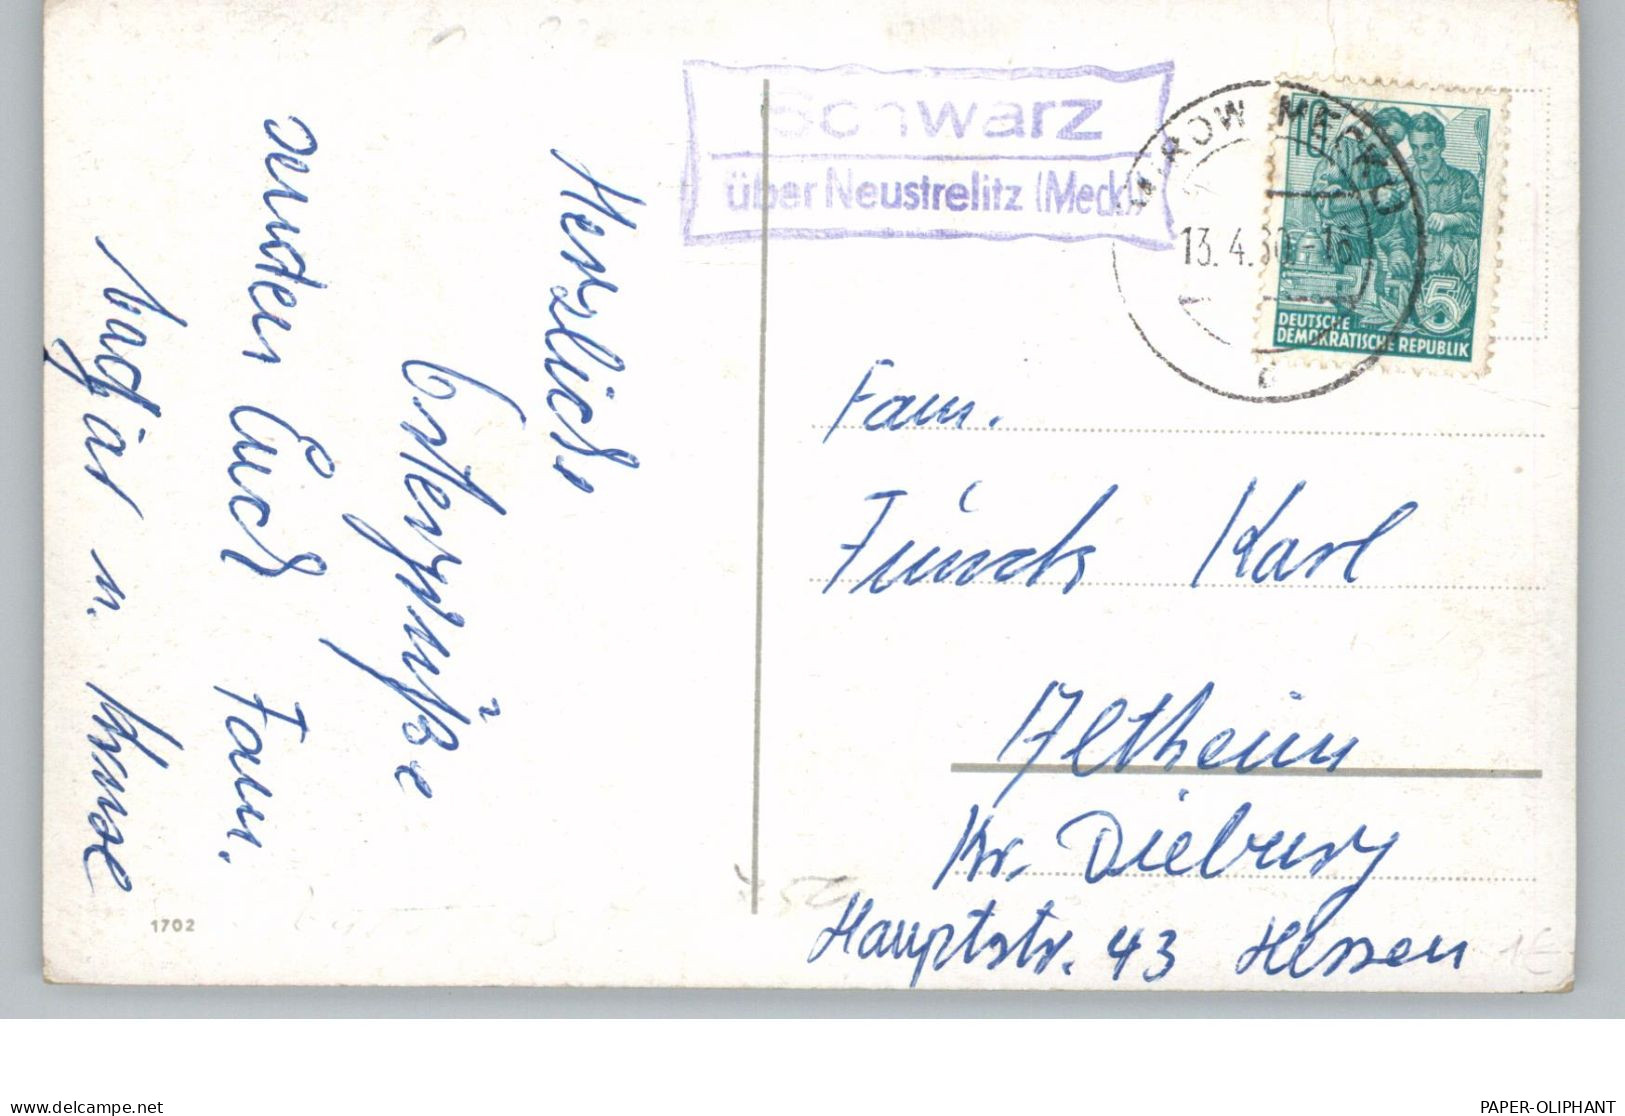 0-2070 RÖBEL - SCHWARZ, Postgeschichte, Landpoststempel "Schwarz über Neustrelitz", 1960 - Roebel